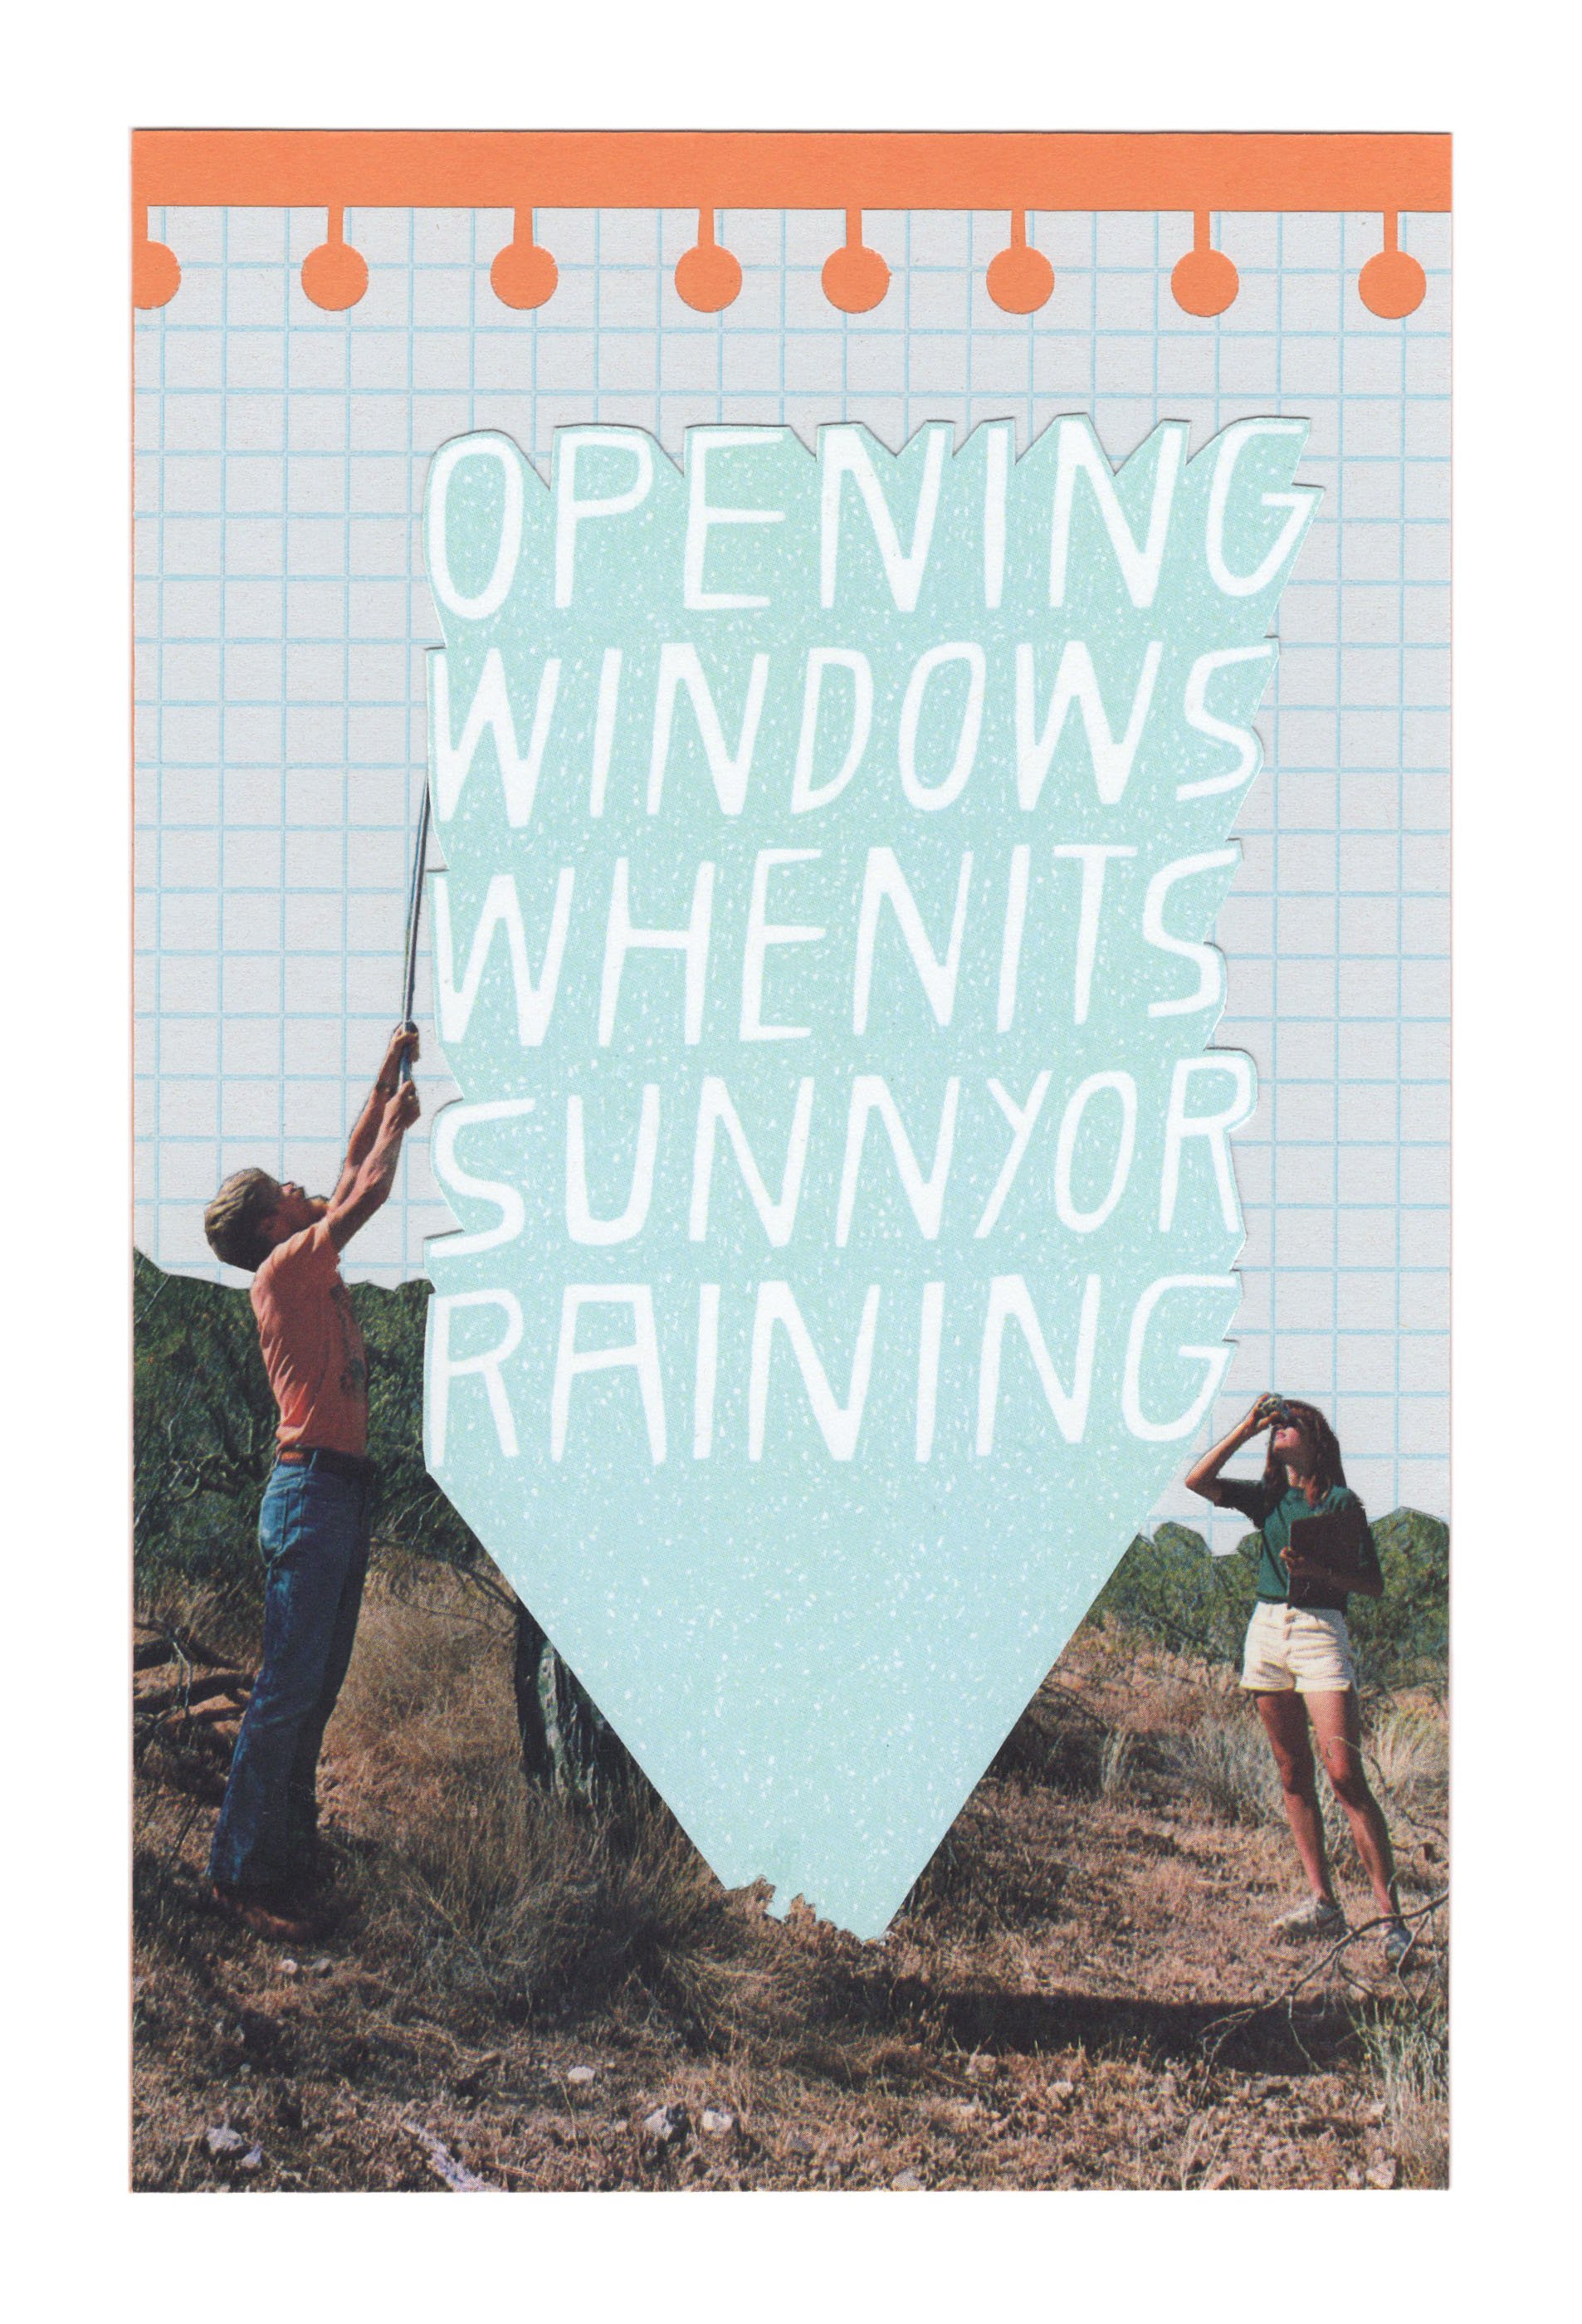 Opening Windows When Its Sunny or Raining.jpeg